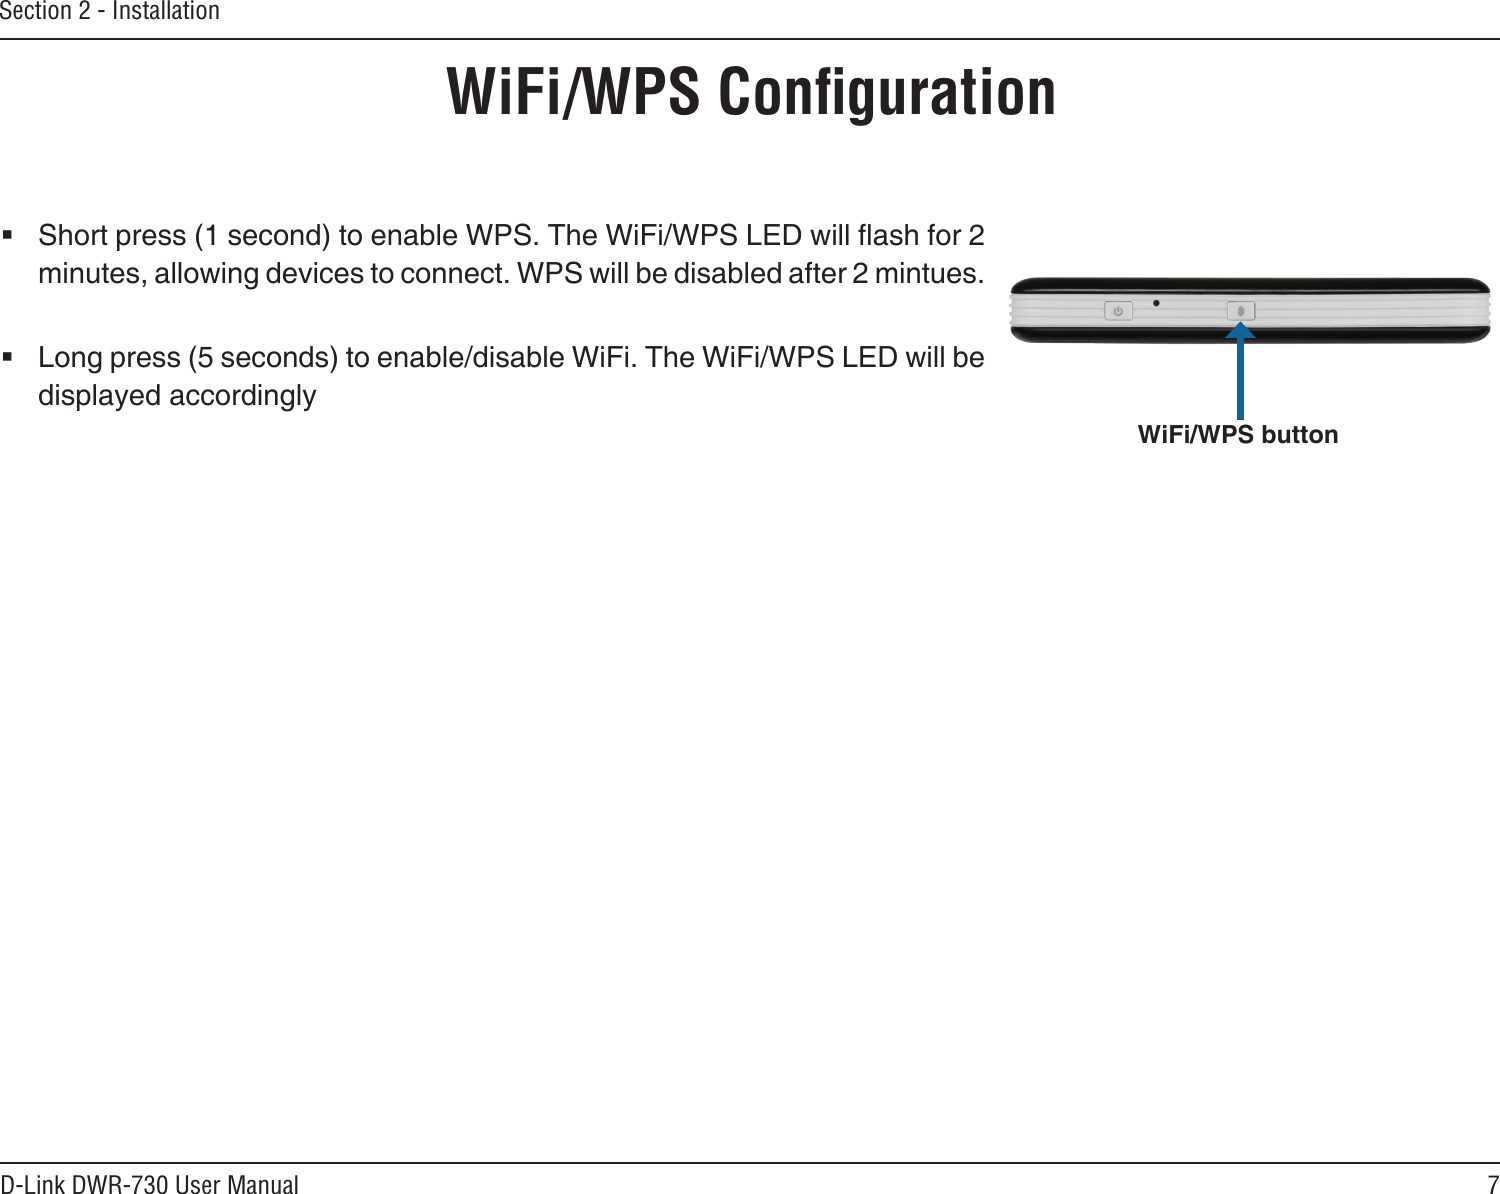 7D-Link DWR-730 User ManualSection 2 - InstallationWiFi/WPS Conﬁguration